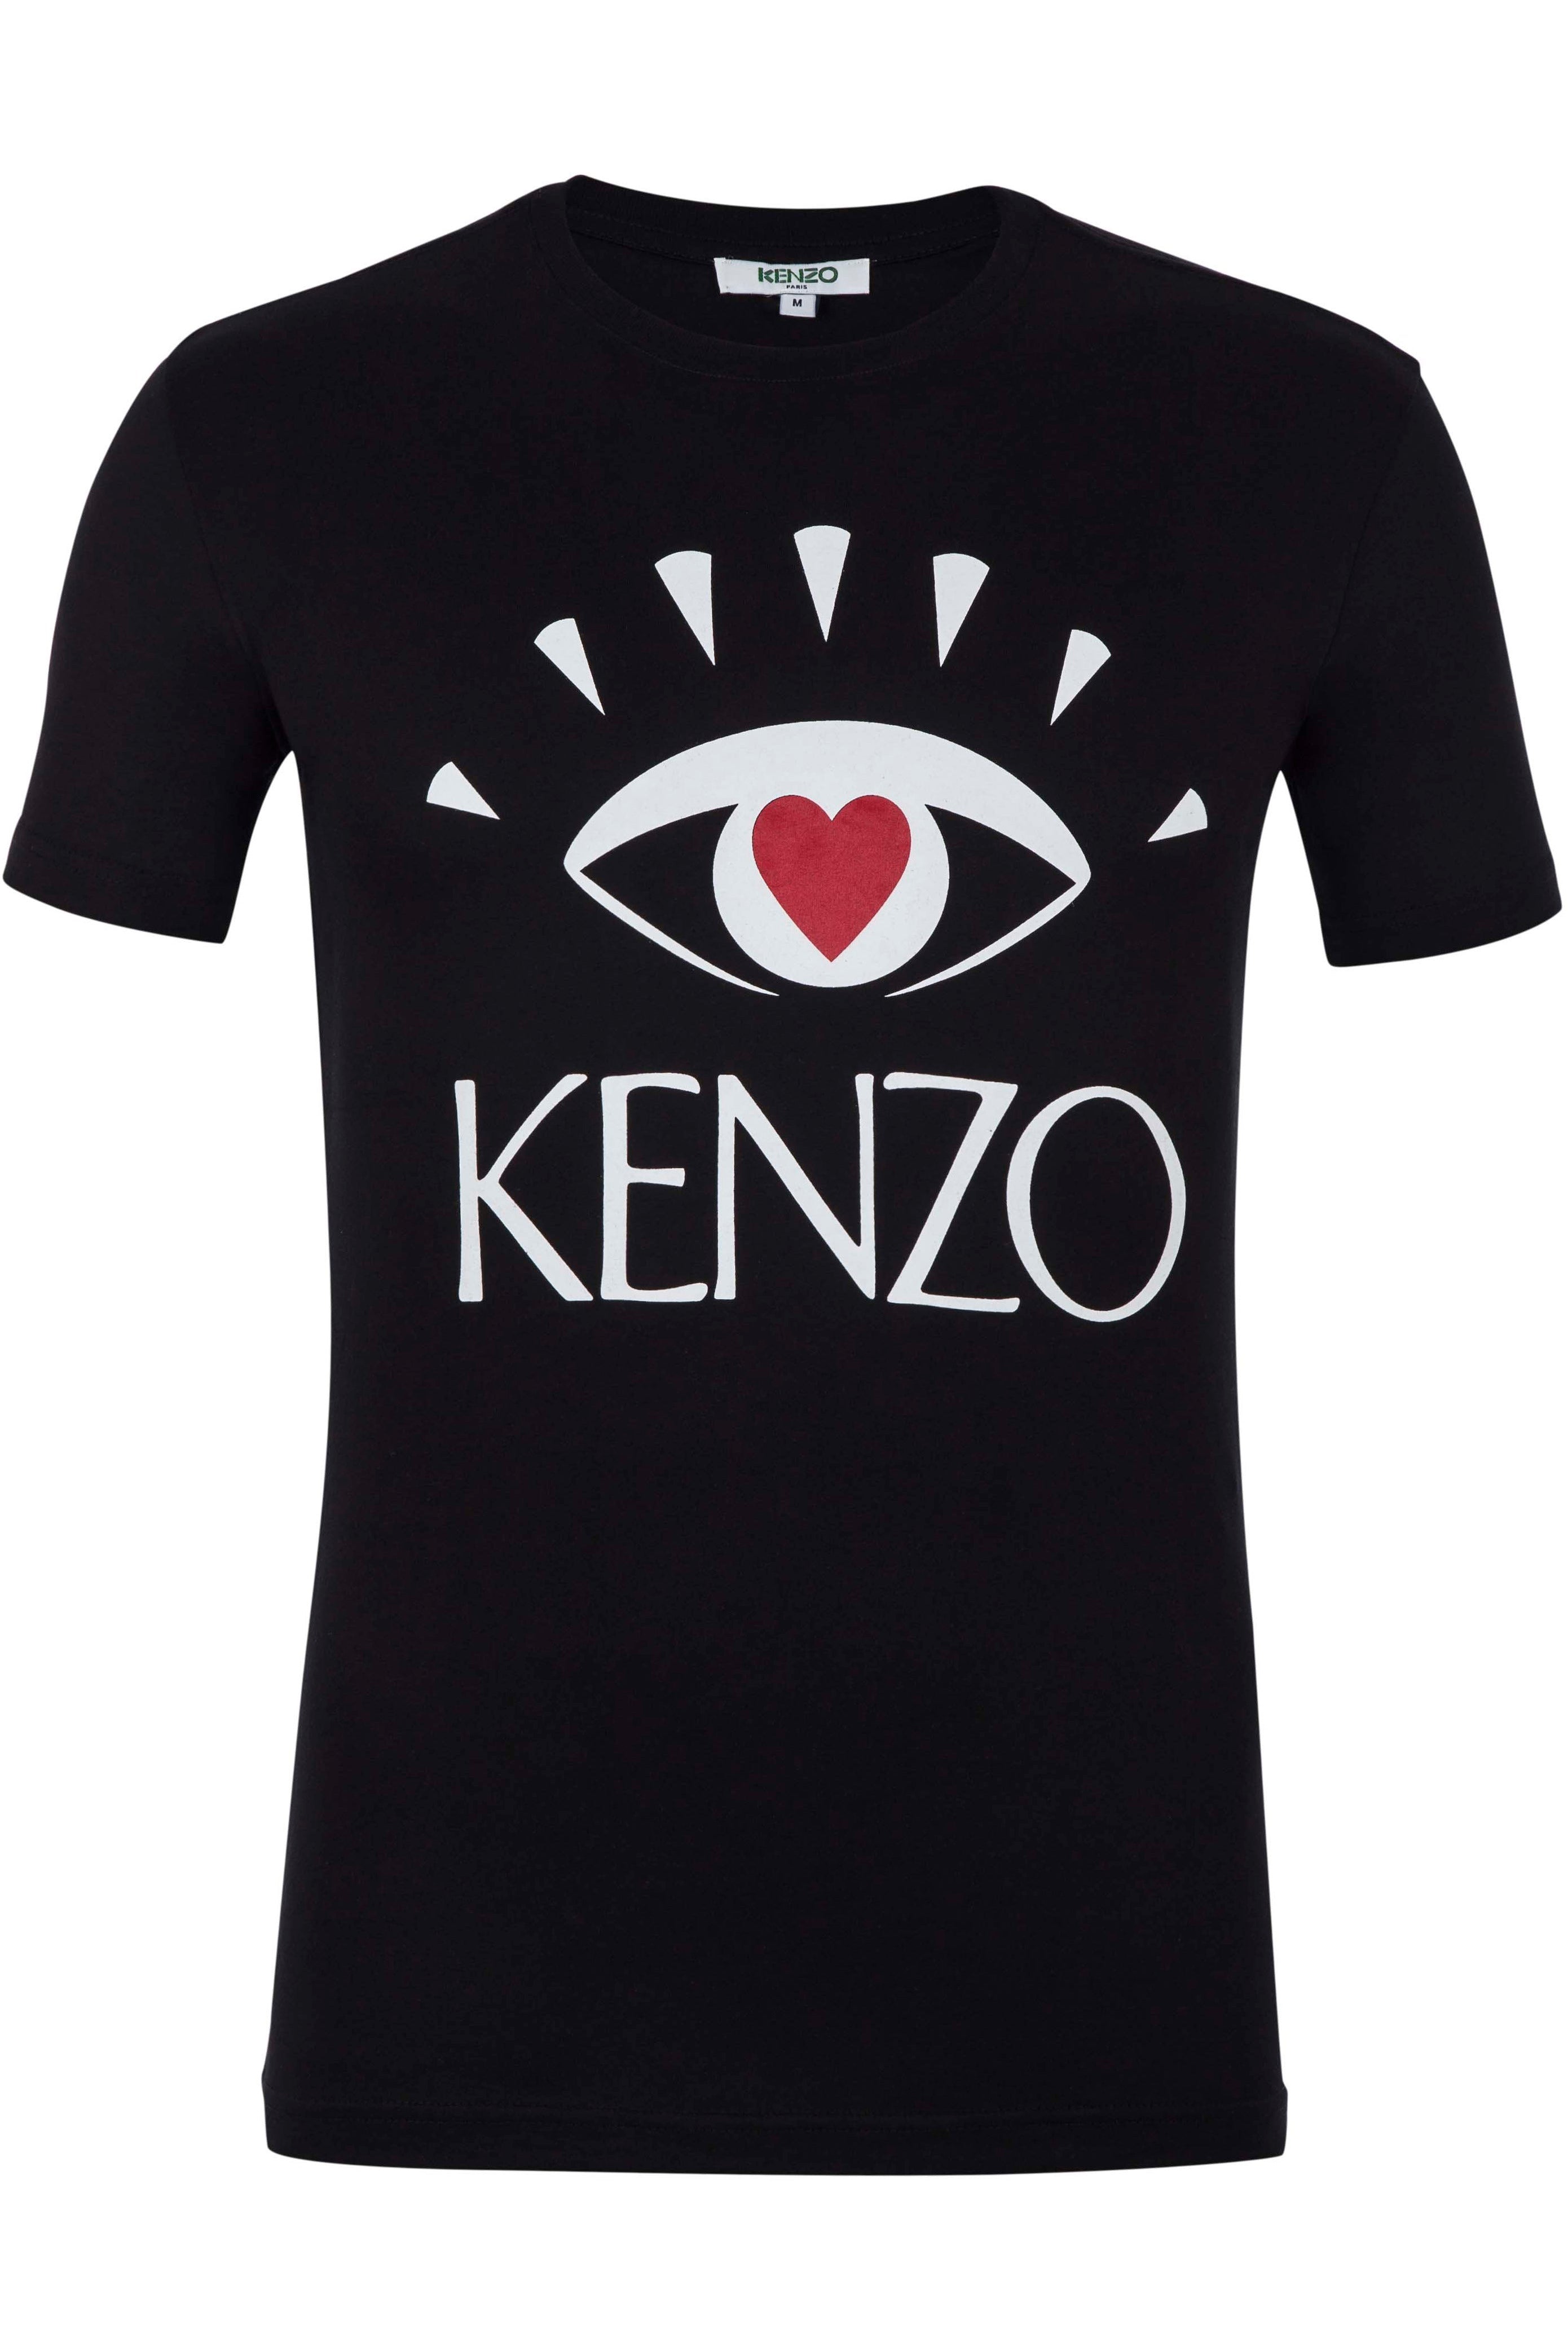 Kenzo T Shirt